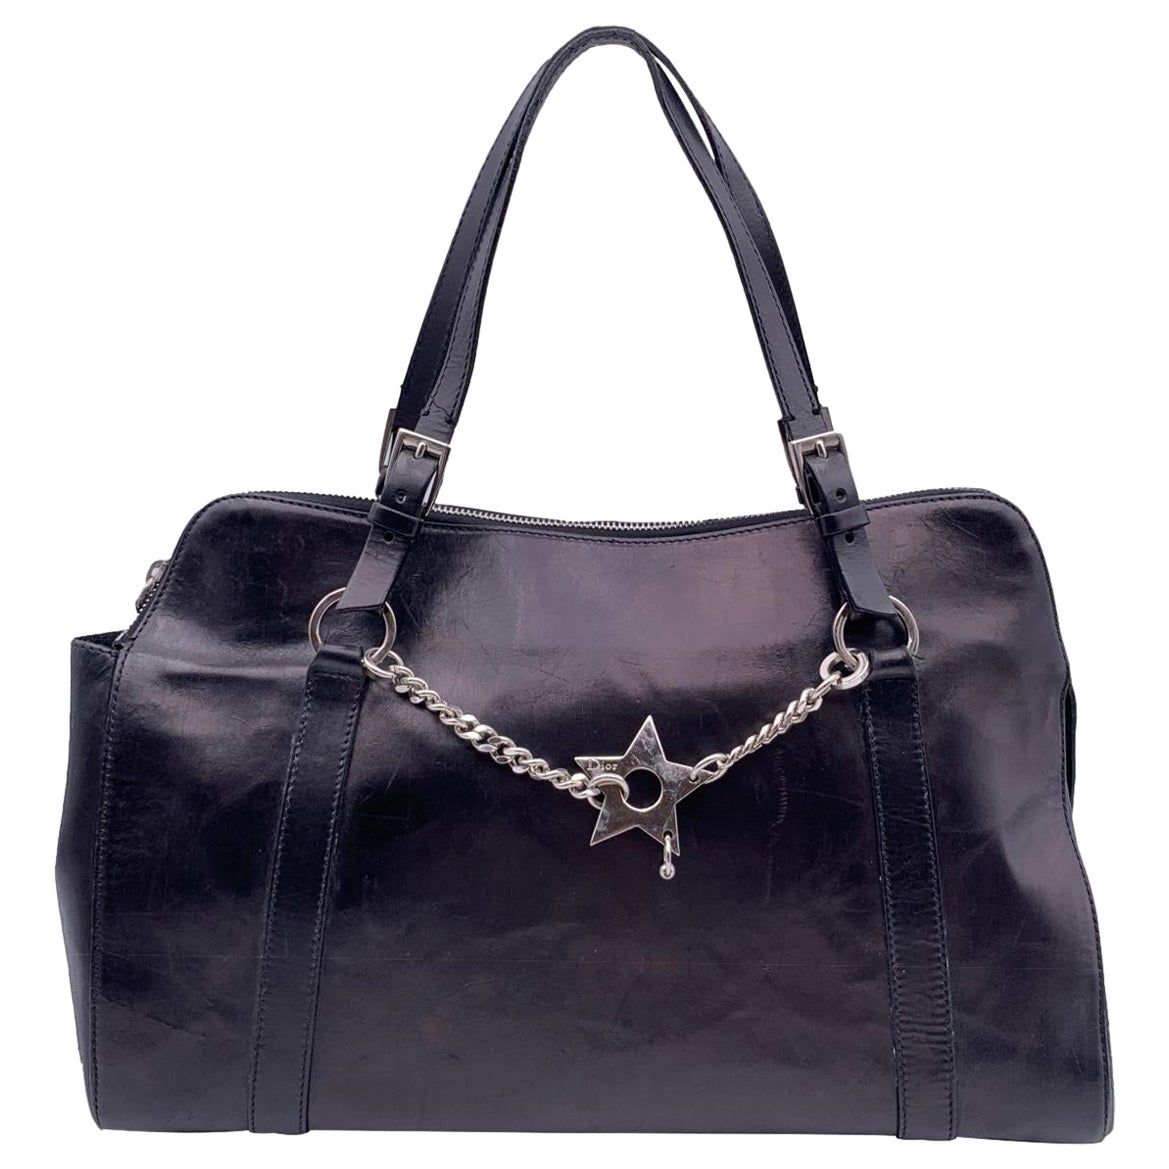 Christian Dior Black Leather Piercing Satchel Bowler Bag Handbag